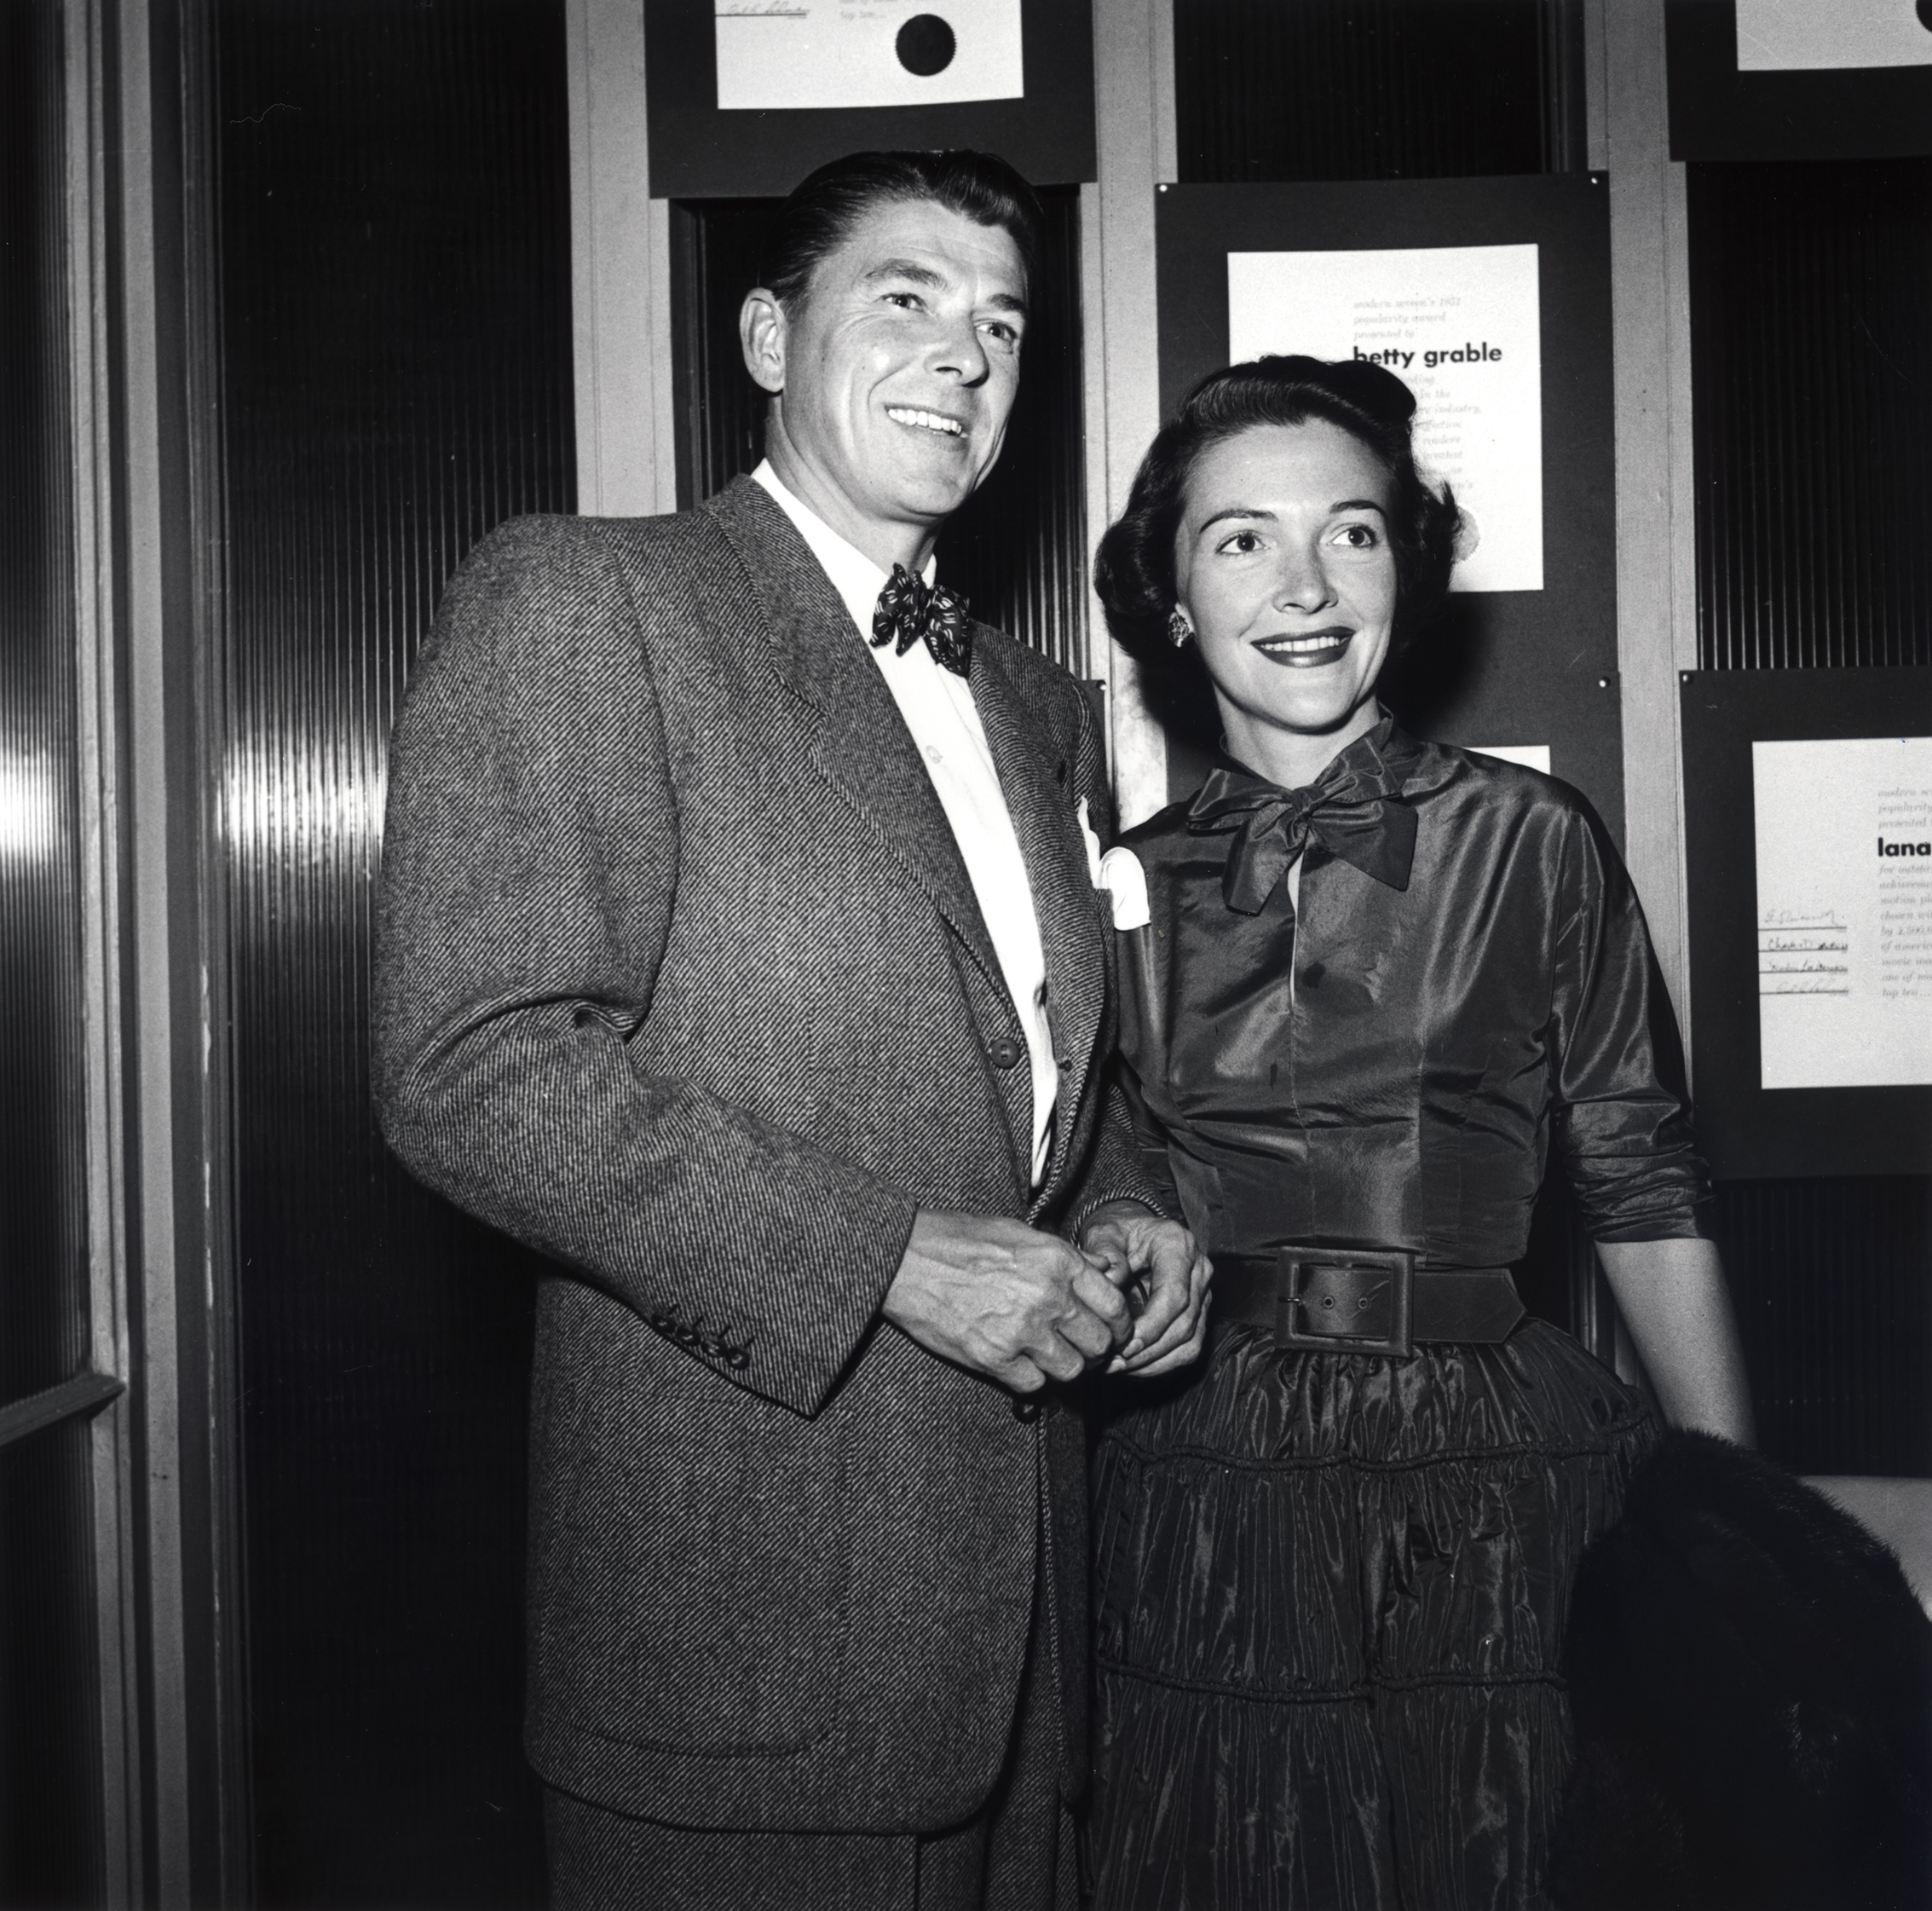 Ronald Reagan and Nancy Reagan posing for a photograph